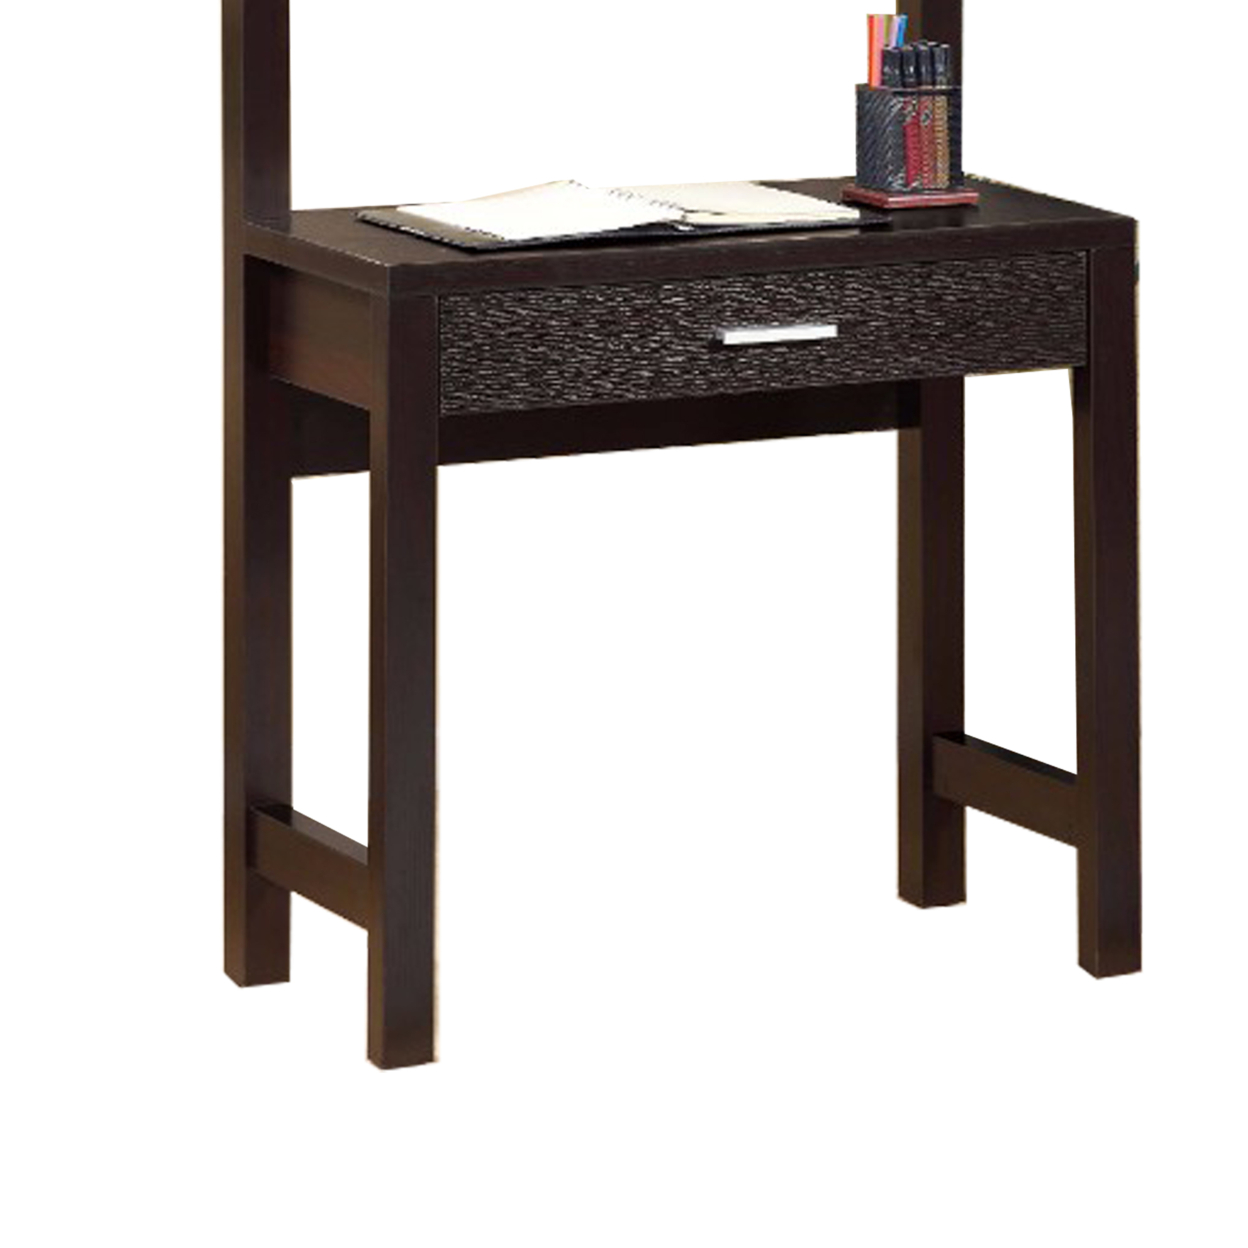 Contemporary Style Desk With 2 Shelves, Dark Brown- Saltoro Sherpi